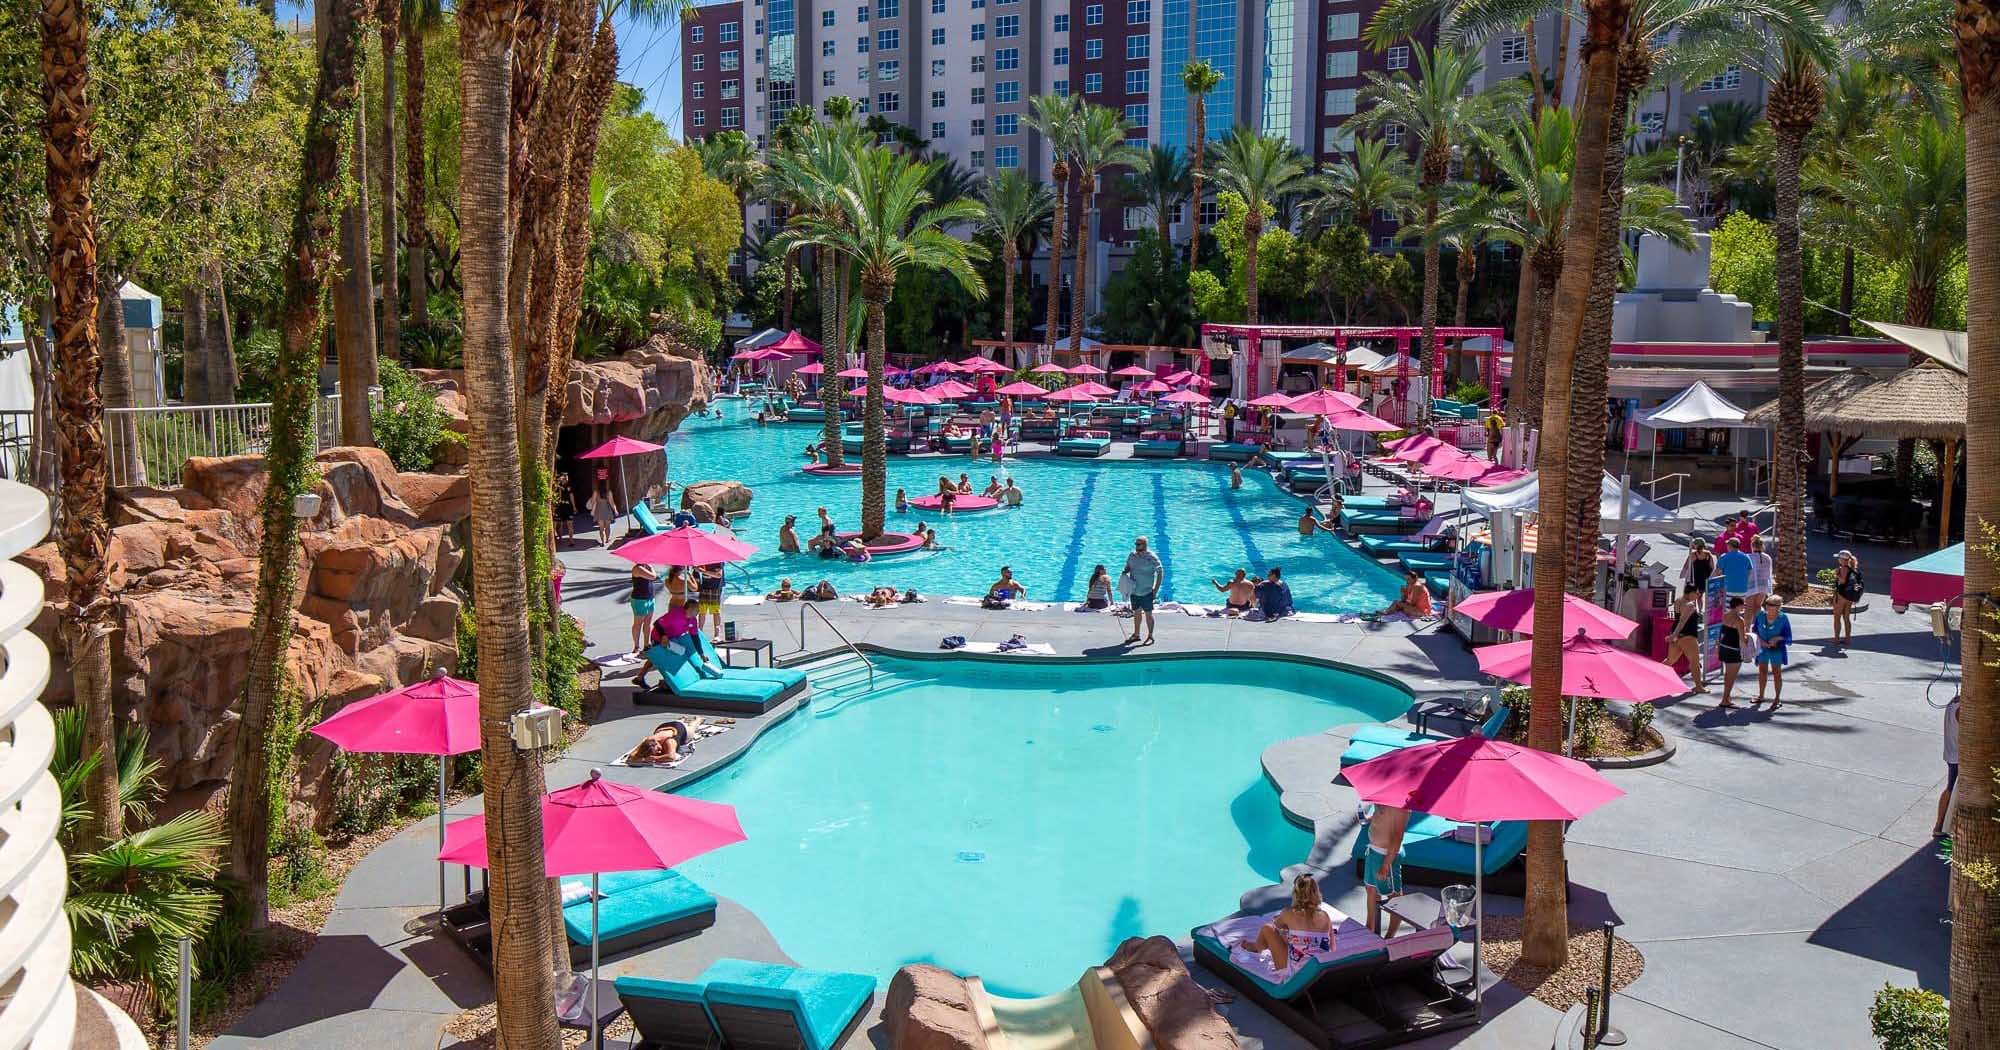 Flamingo pool Las Vegas Hotels